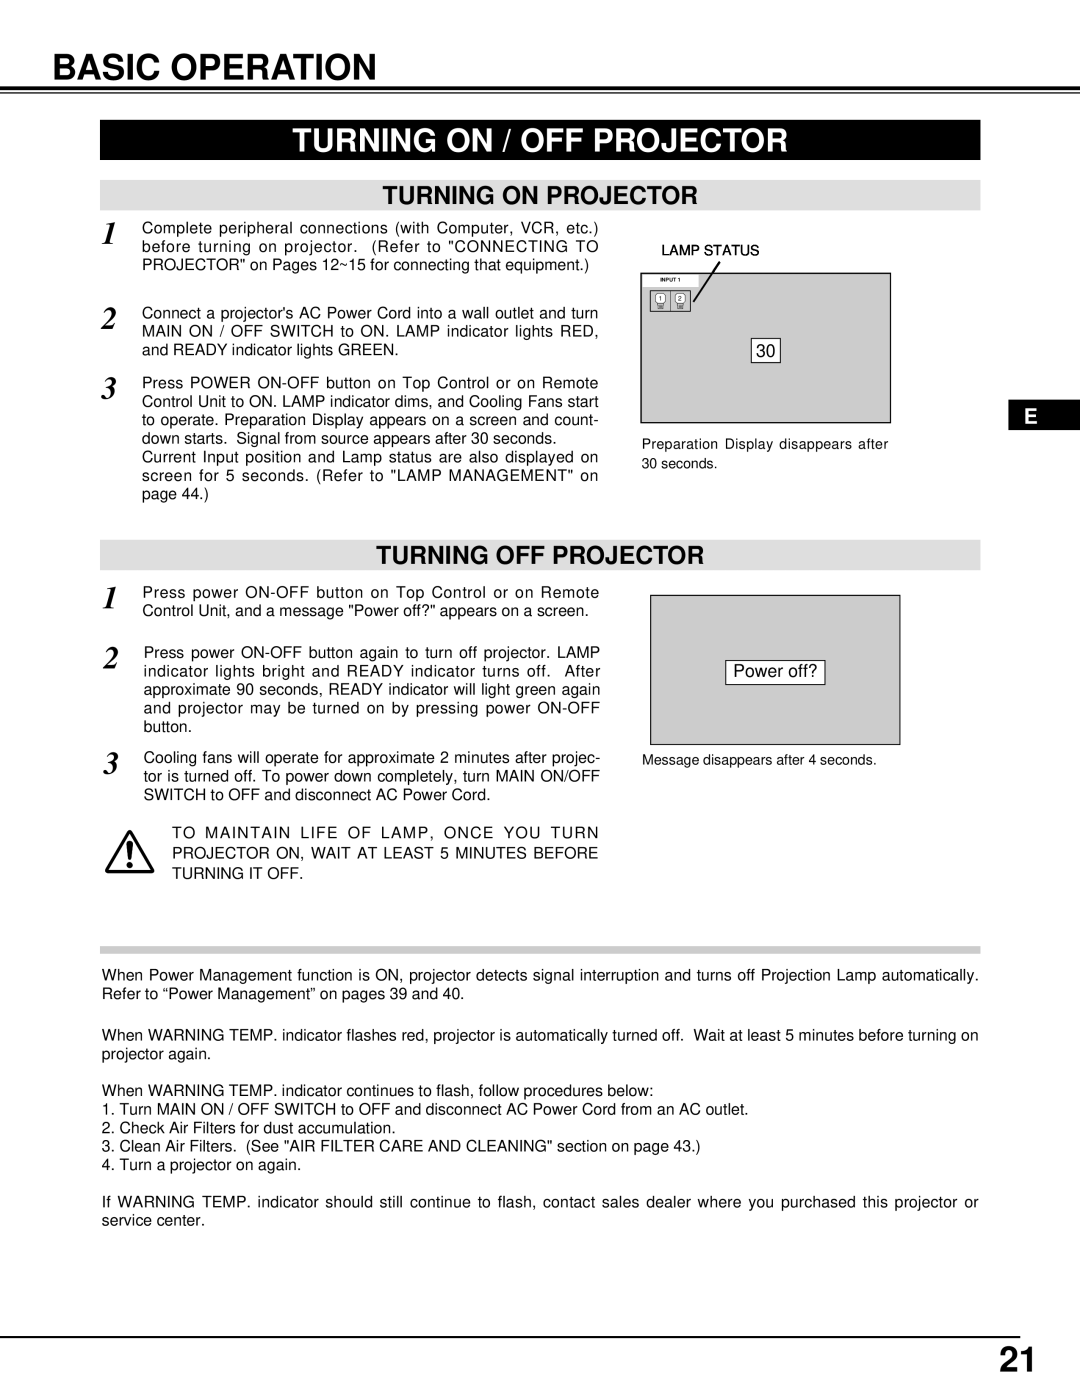 Dukane 28A8945, 28A9058 manual Basic Operation, Turning On / Off Projector, Turning On Projector, Turning Off Projector 